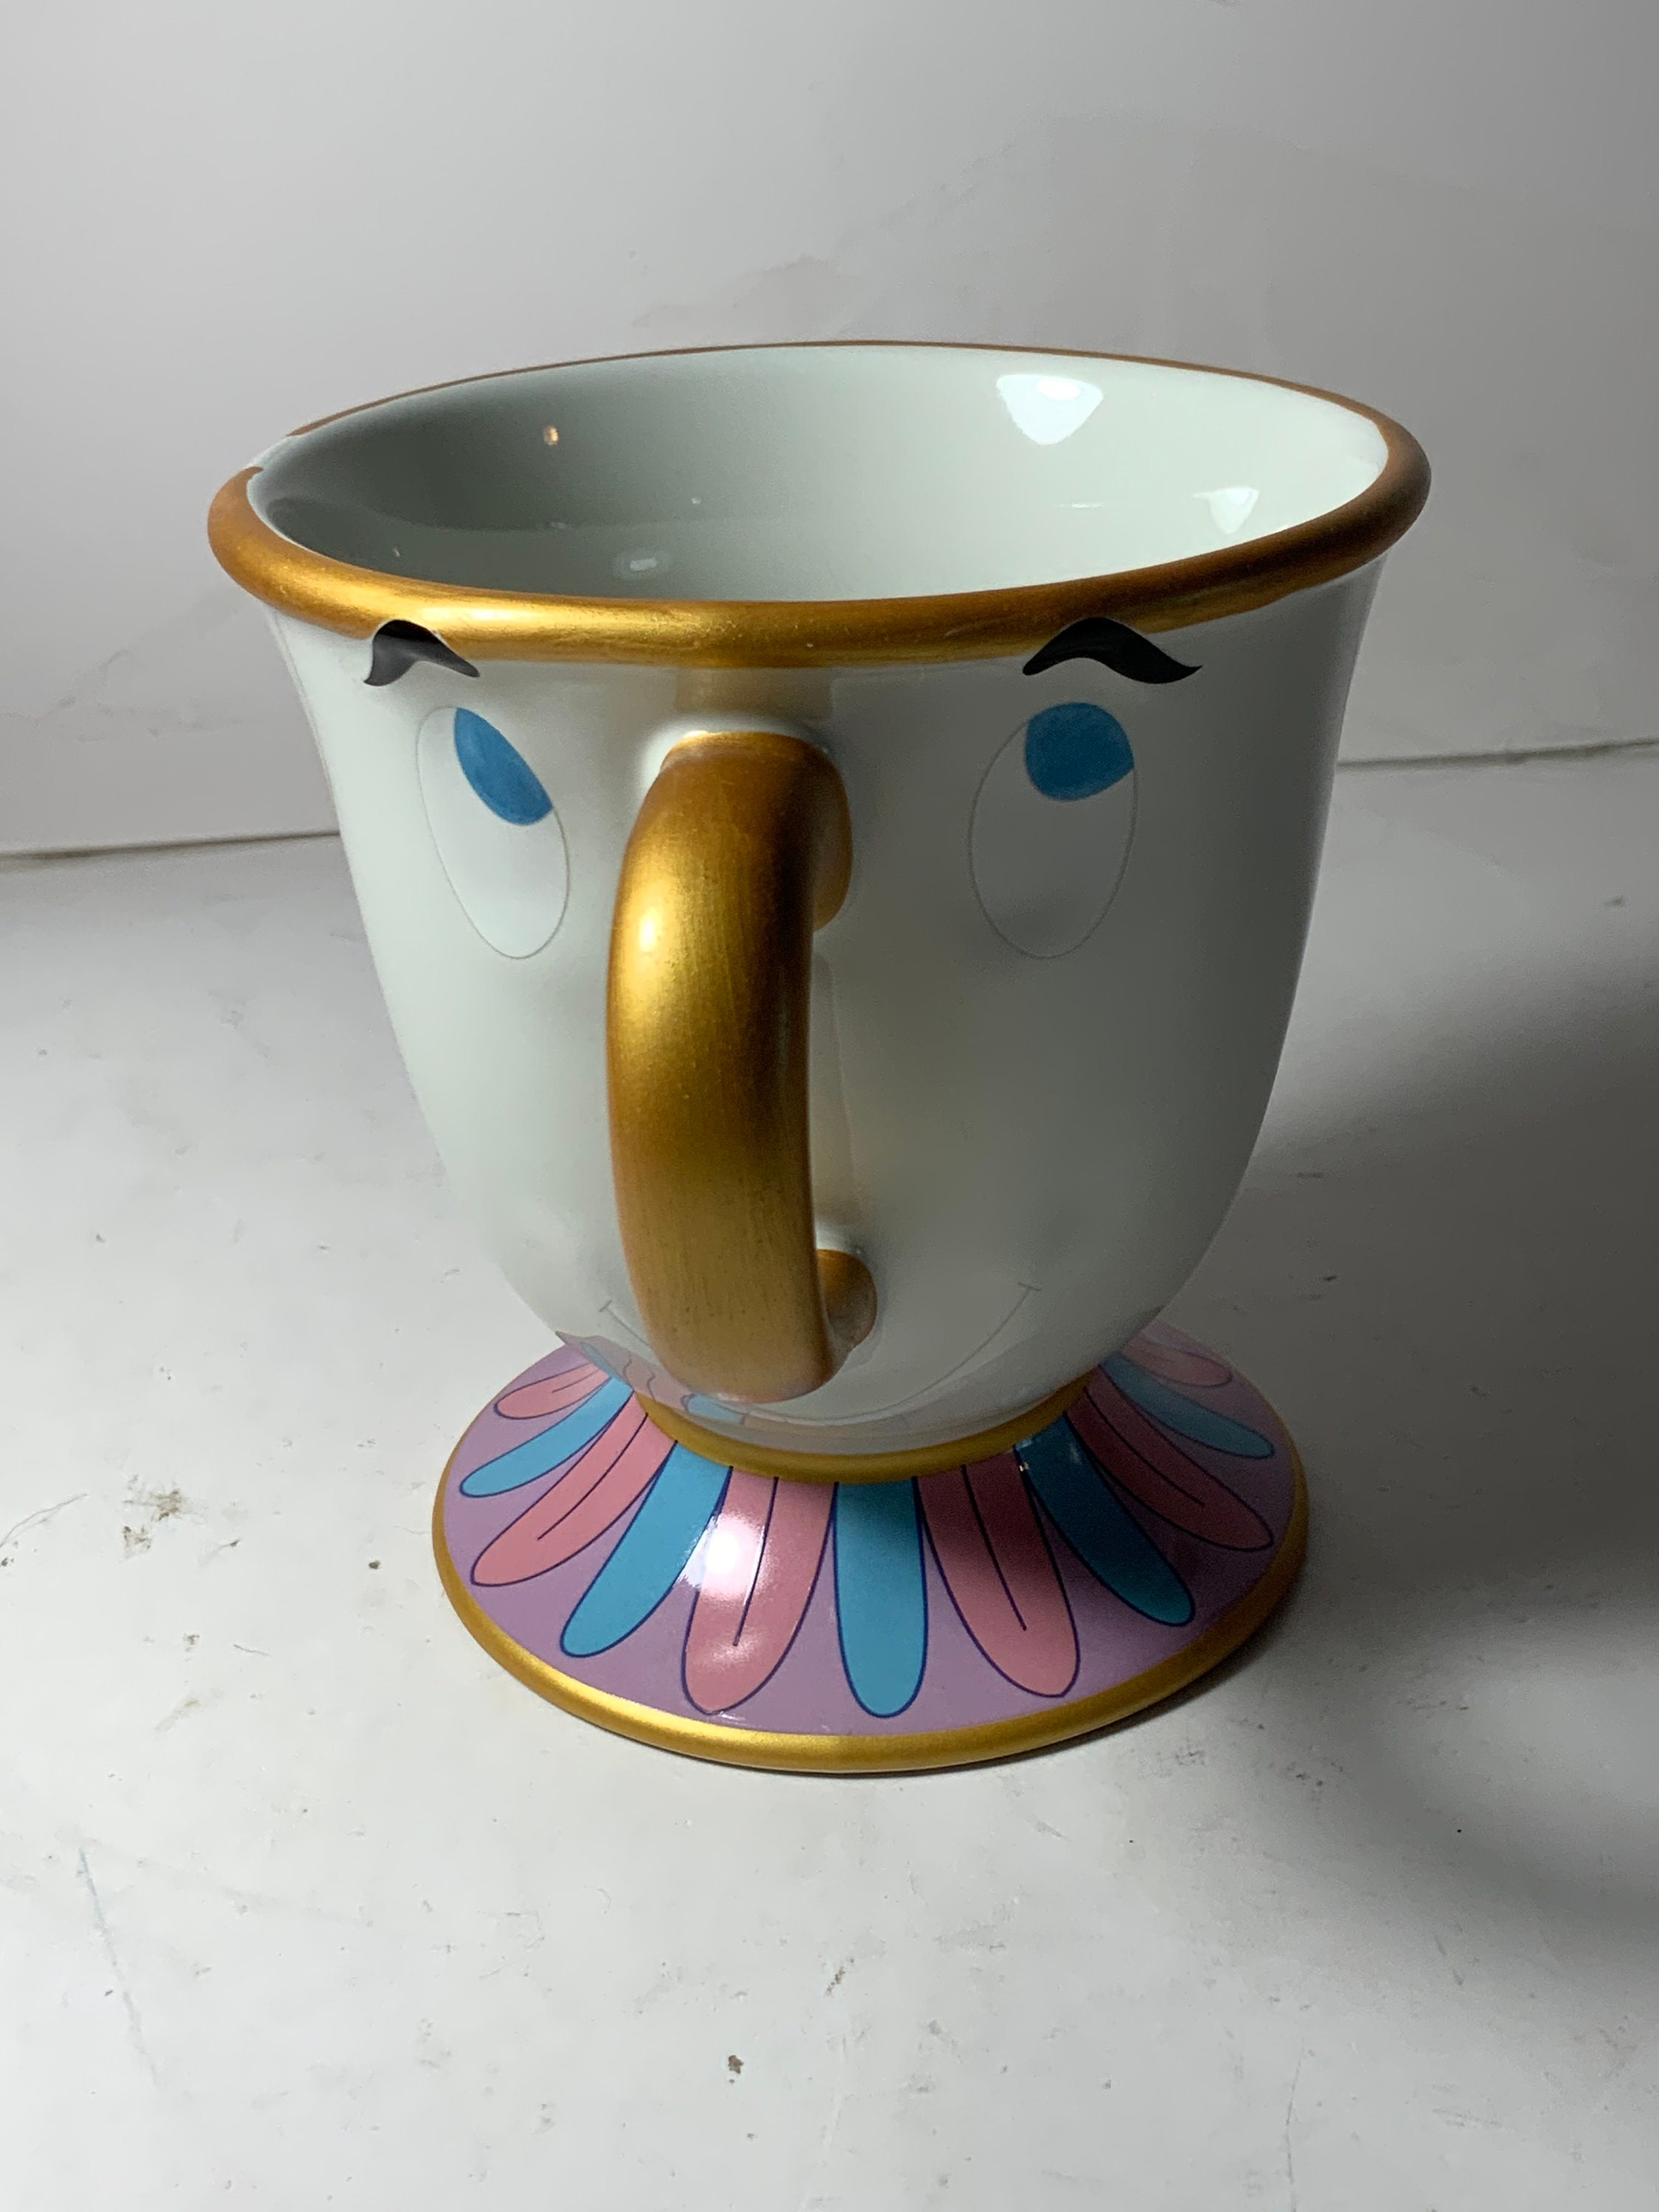 New Disney Parks Beauty and the Beast – Chip Ceramic Coffee Mug